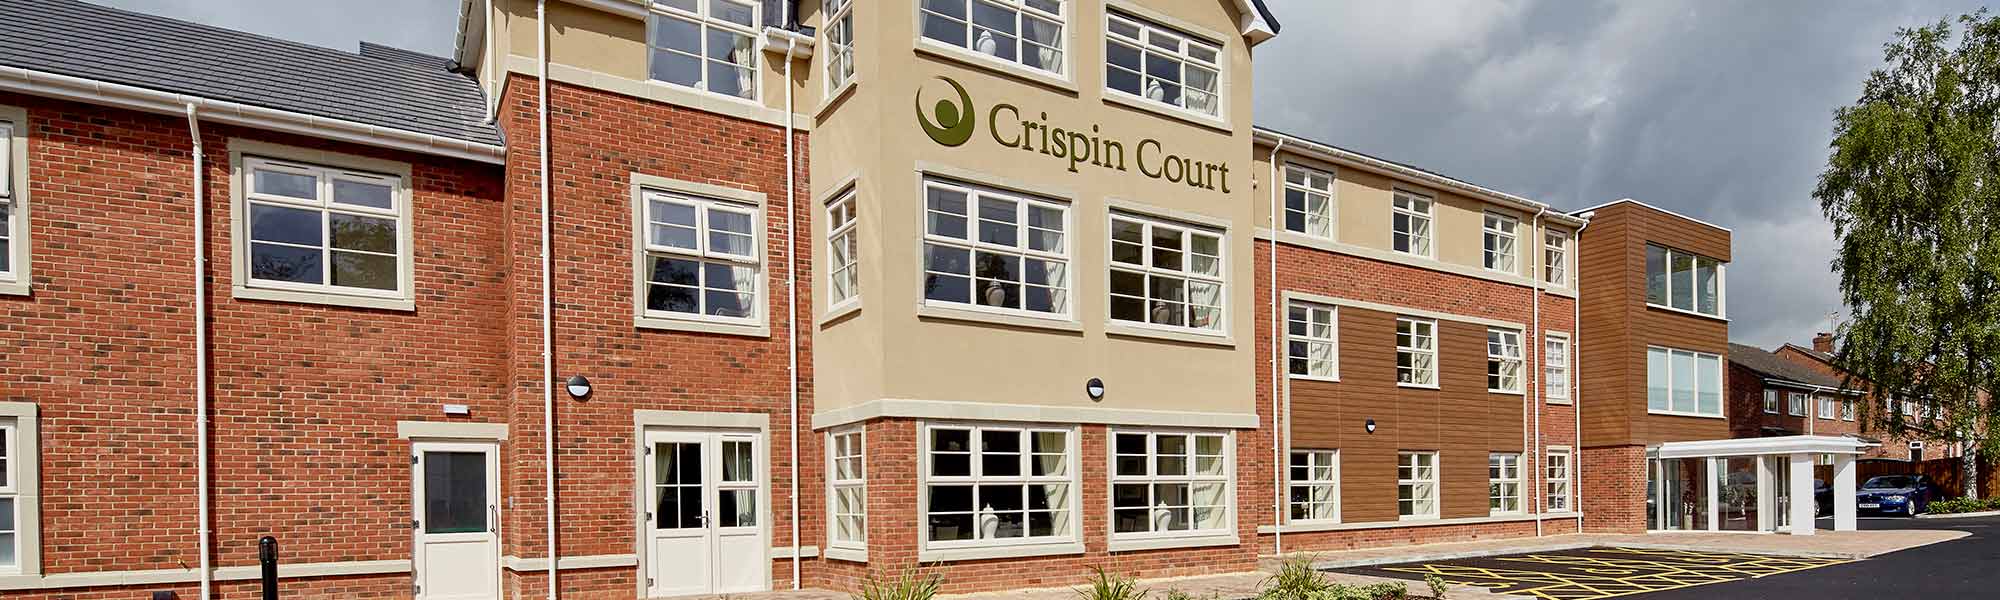 Private care home Crispin Court in Stafford